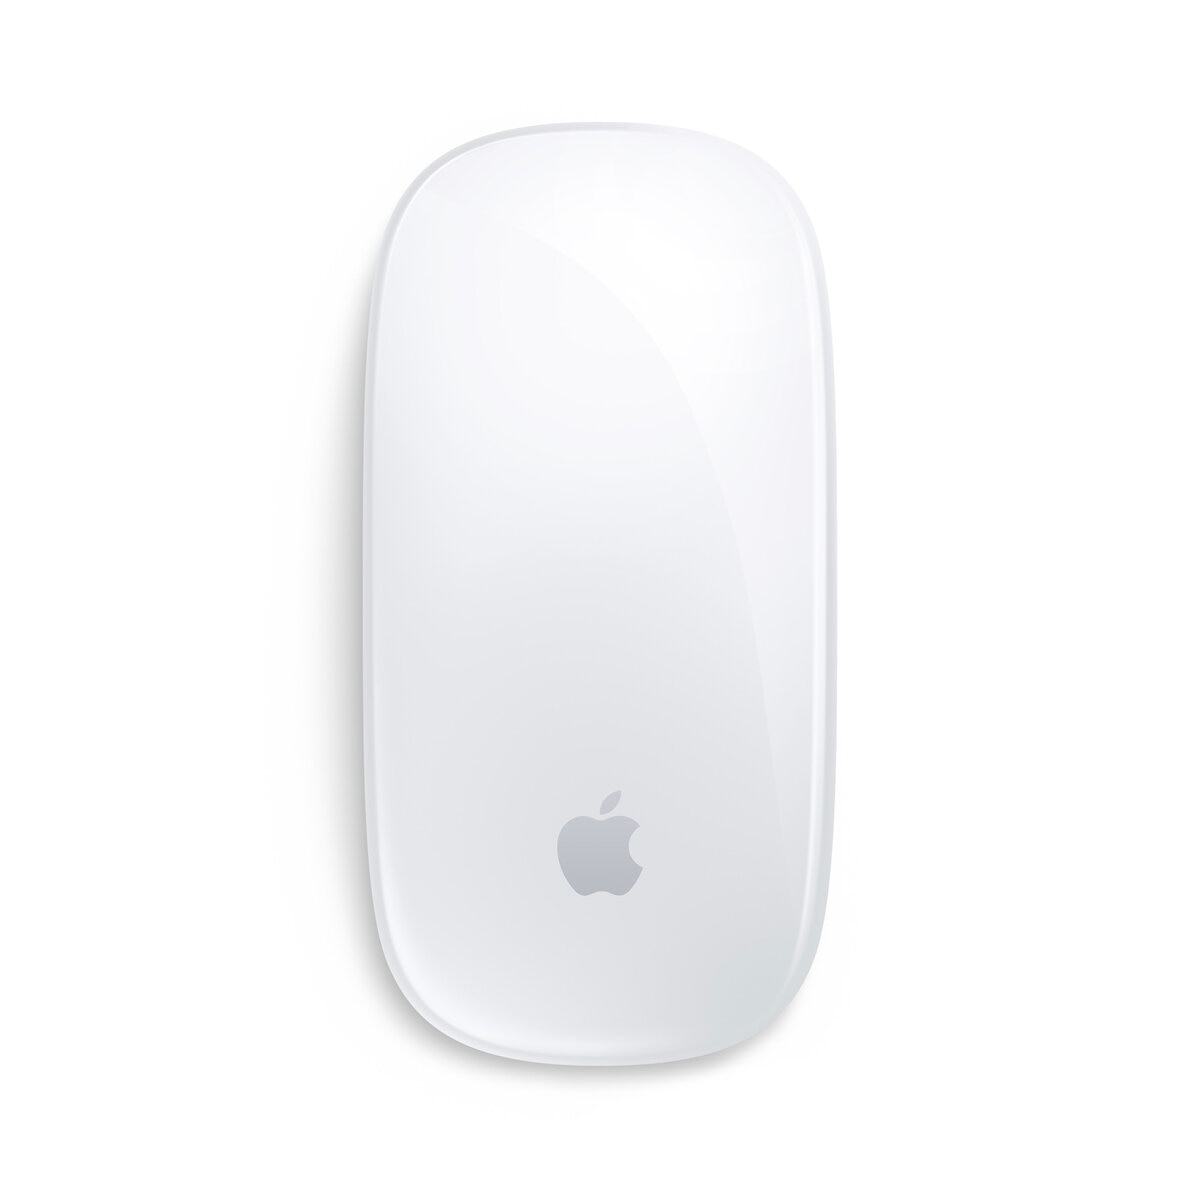 Magic Mouse -スペースグレイ(Multi-Touch対応)A1657